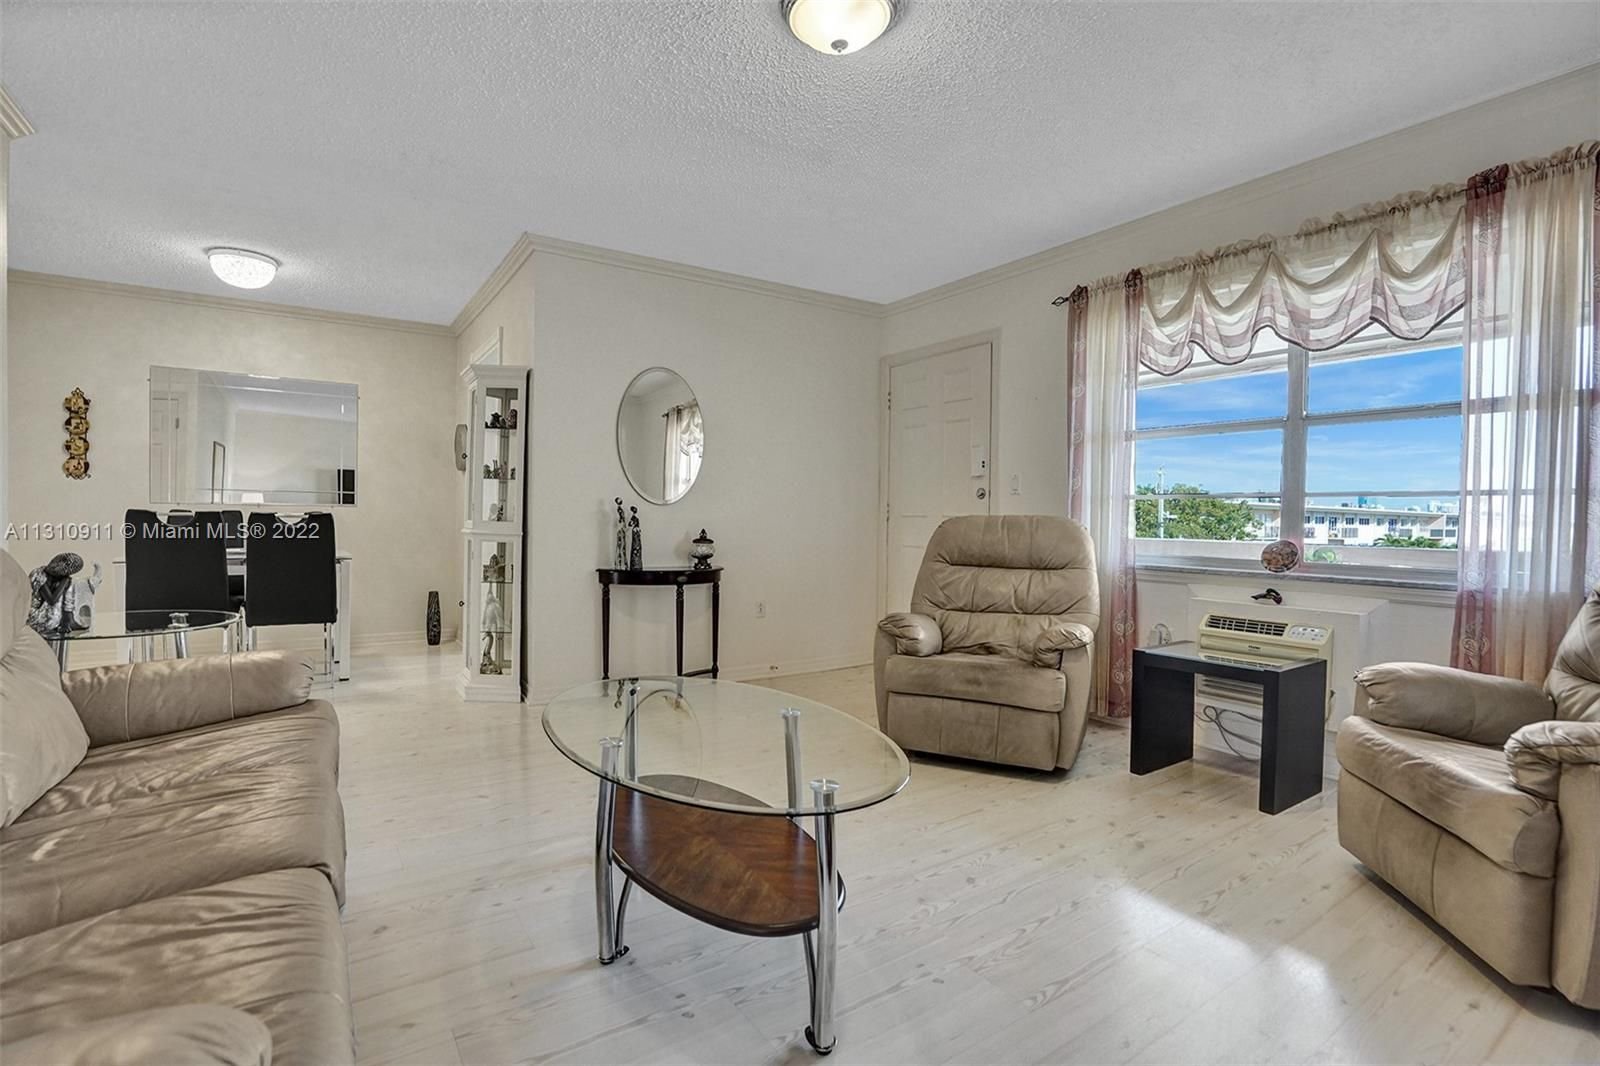 Real estate property located at 16790 14th Ave #305, Miami-Dade County, Miami, FL